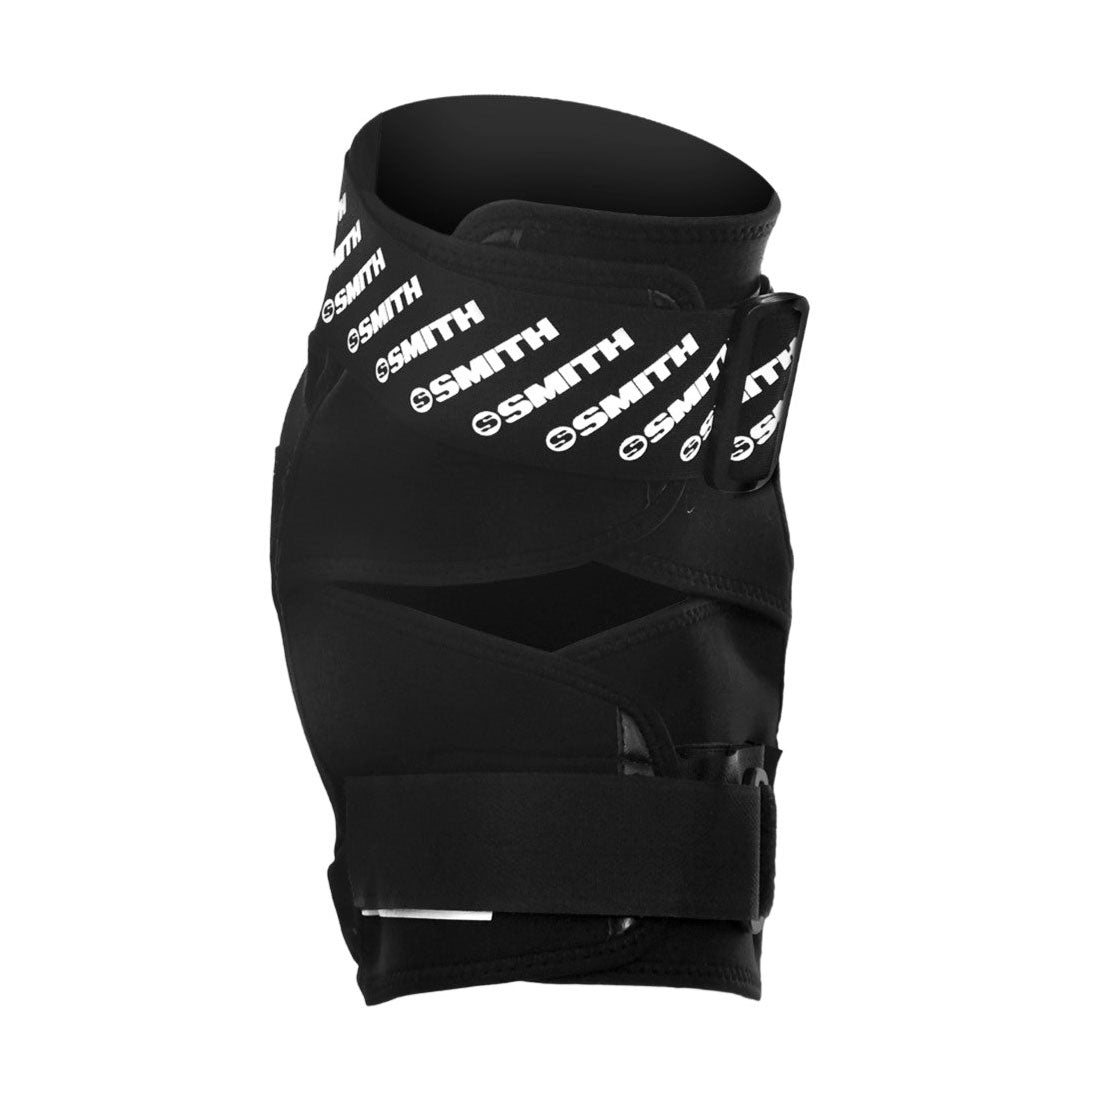 Smith Scabs Elite Knee - Black/White Protective Gear